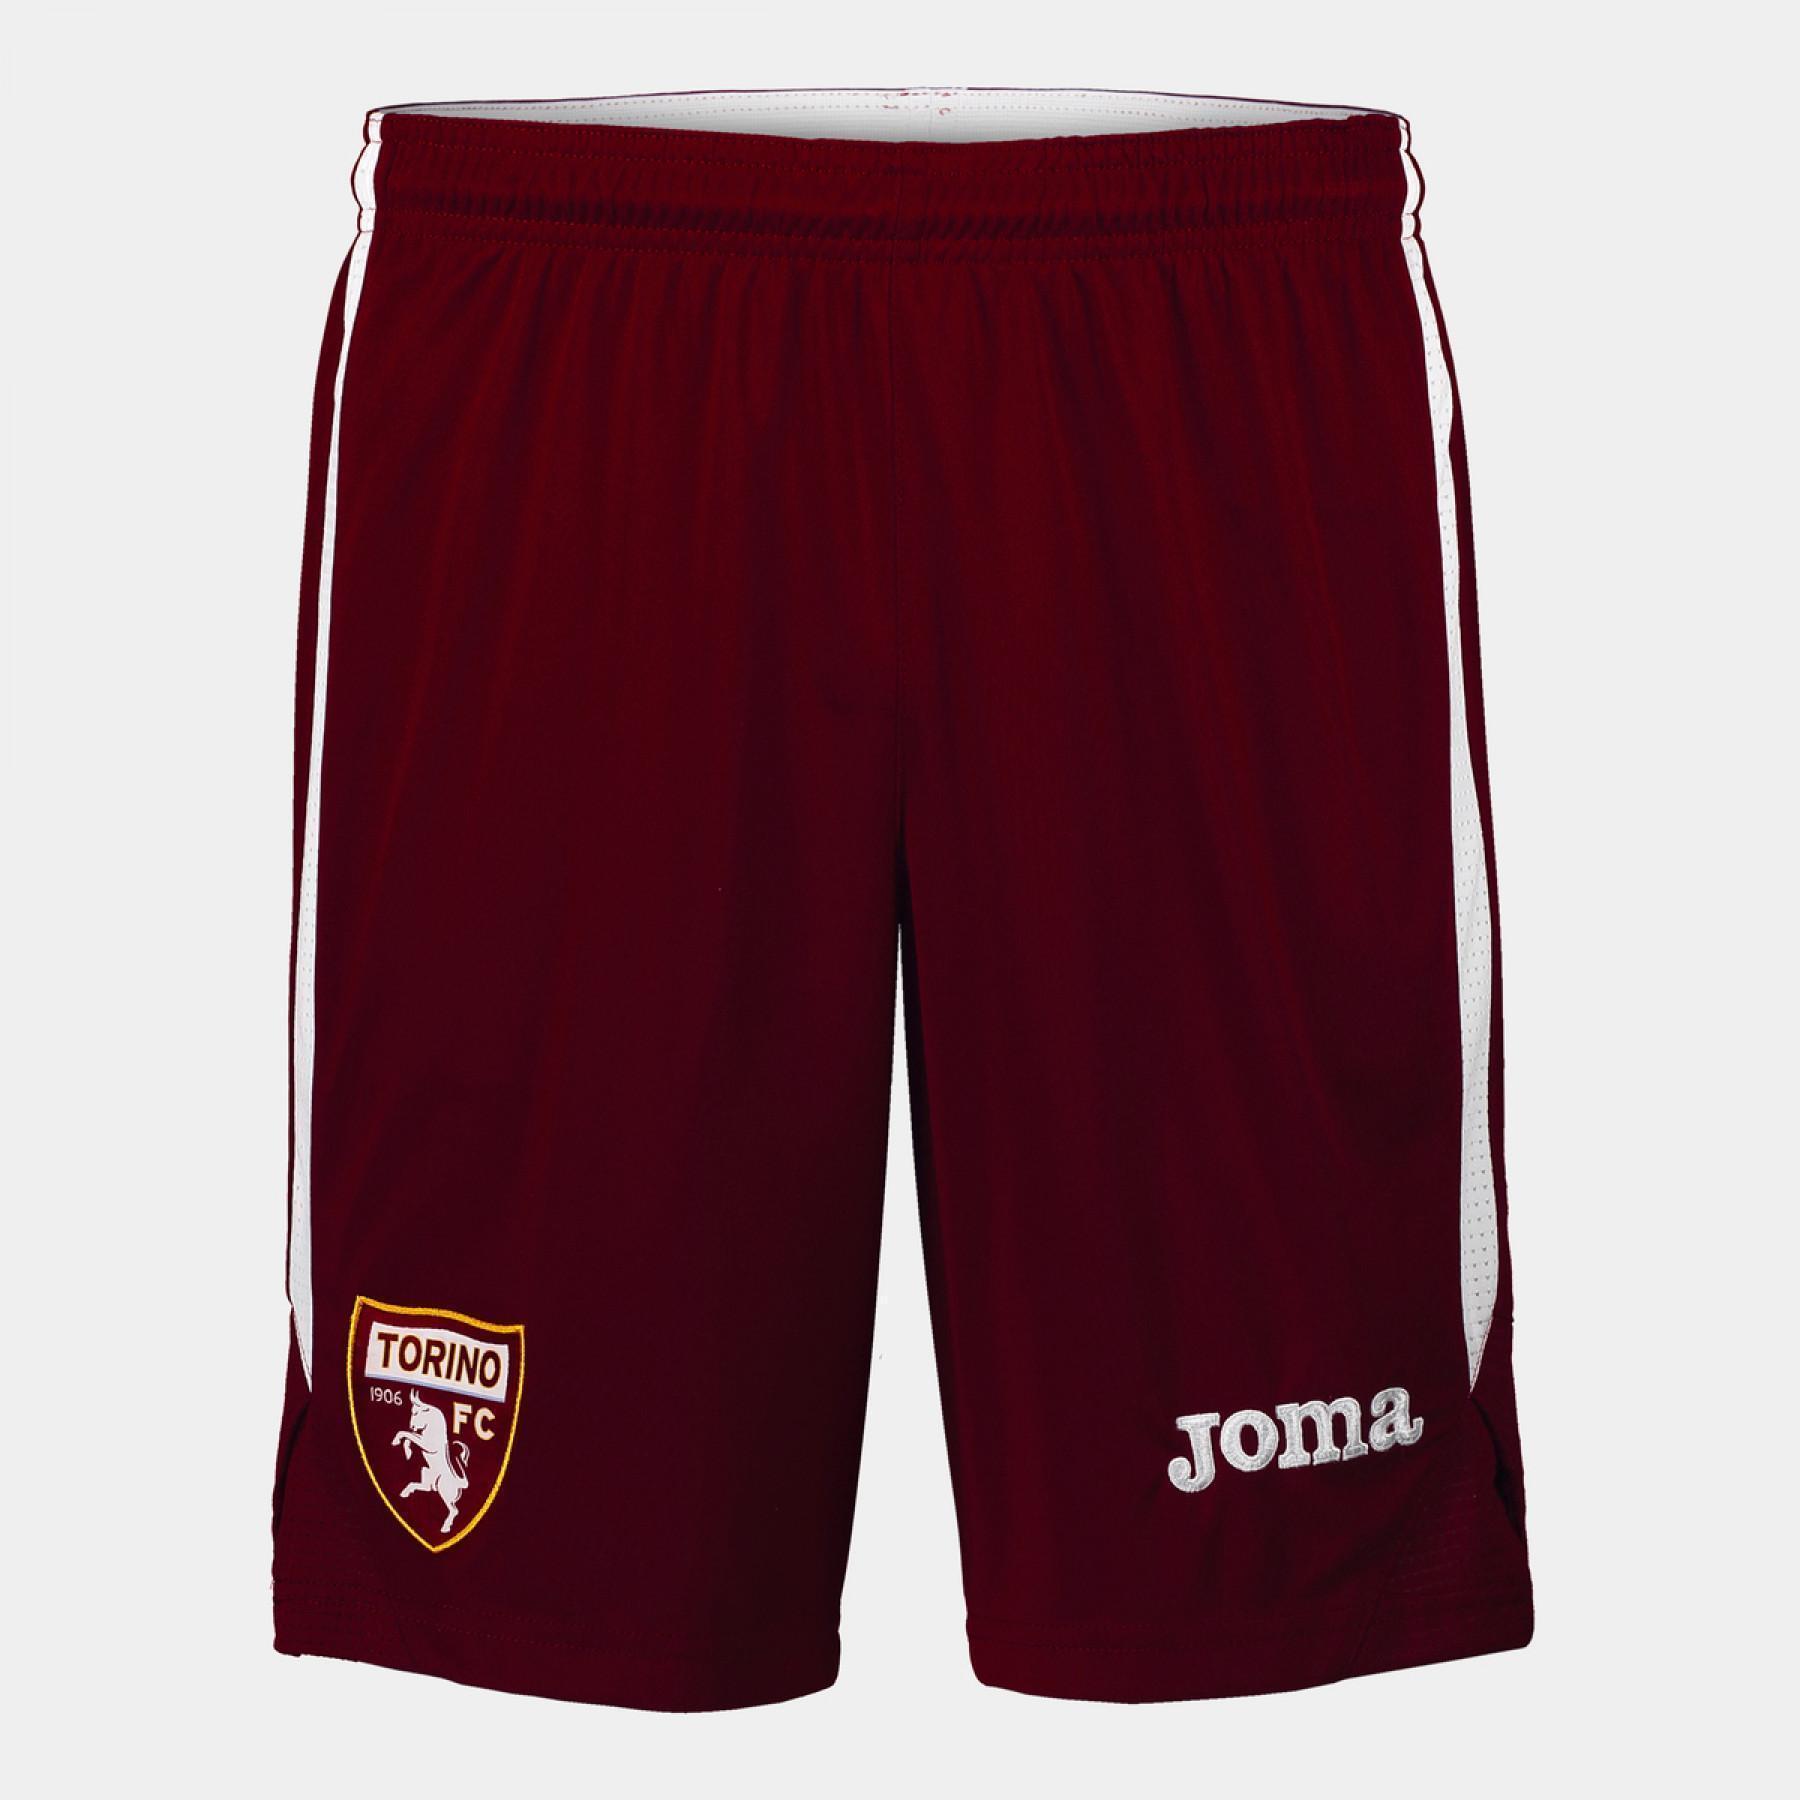 Home shorts Torino FC 2020/21